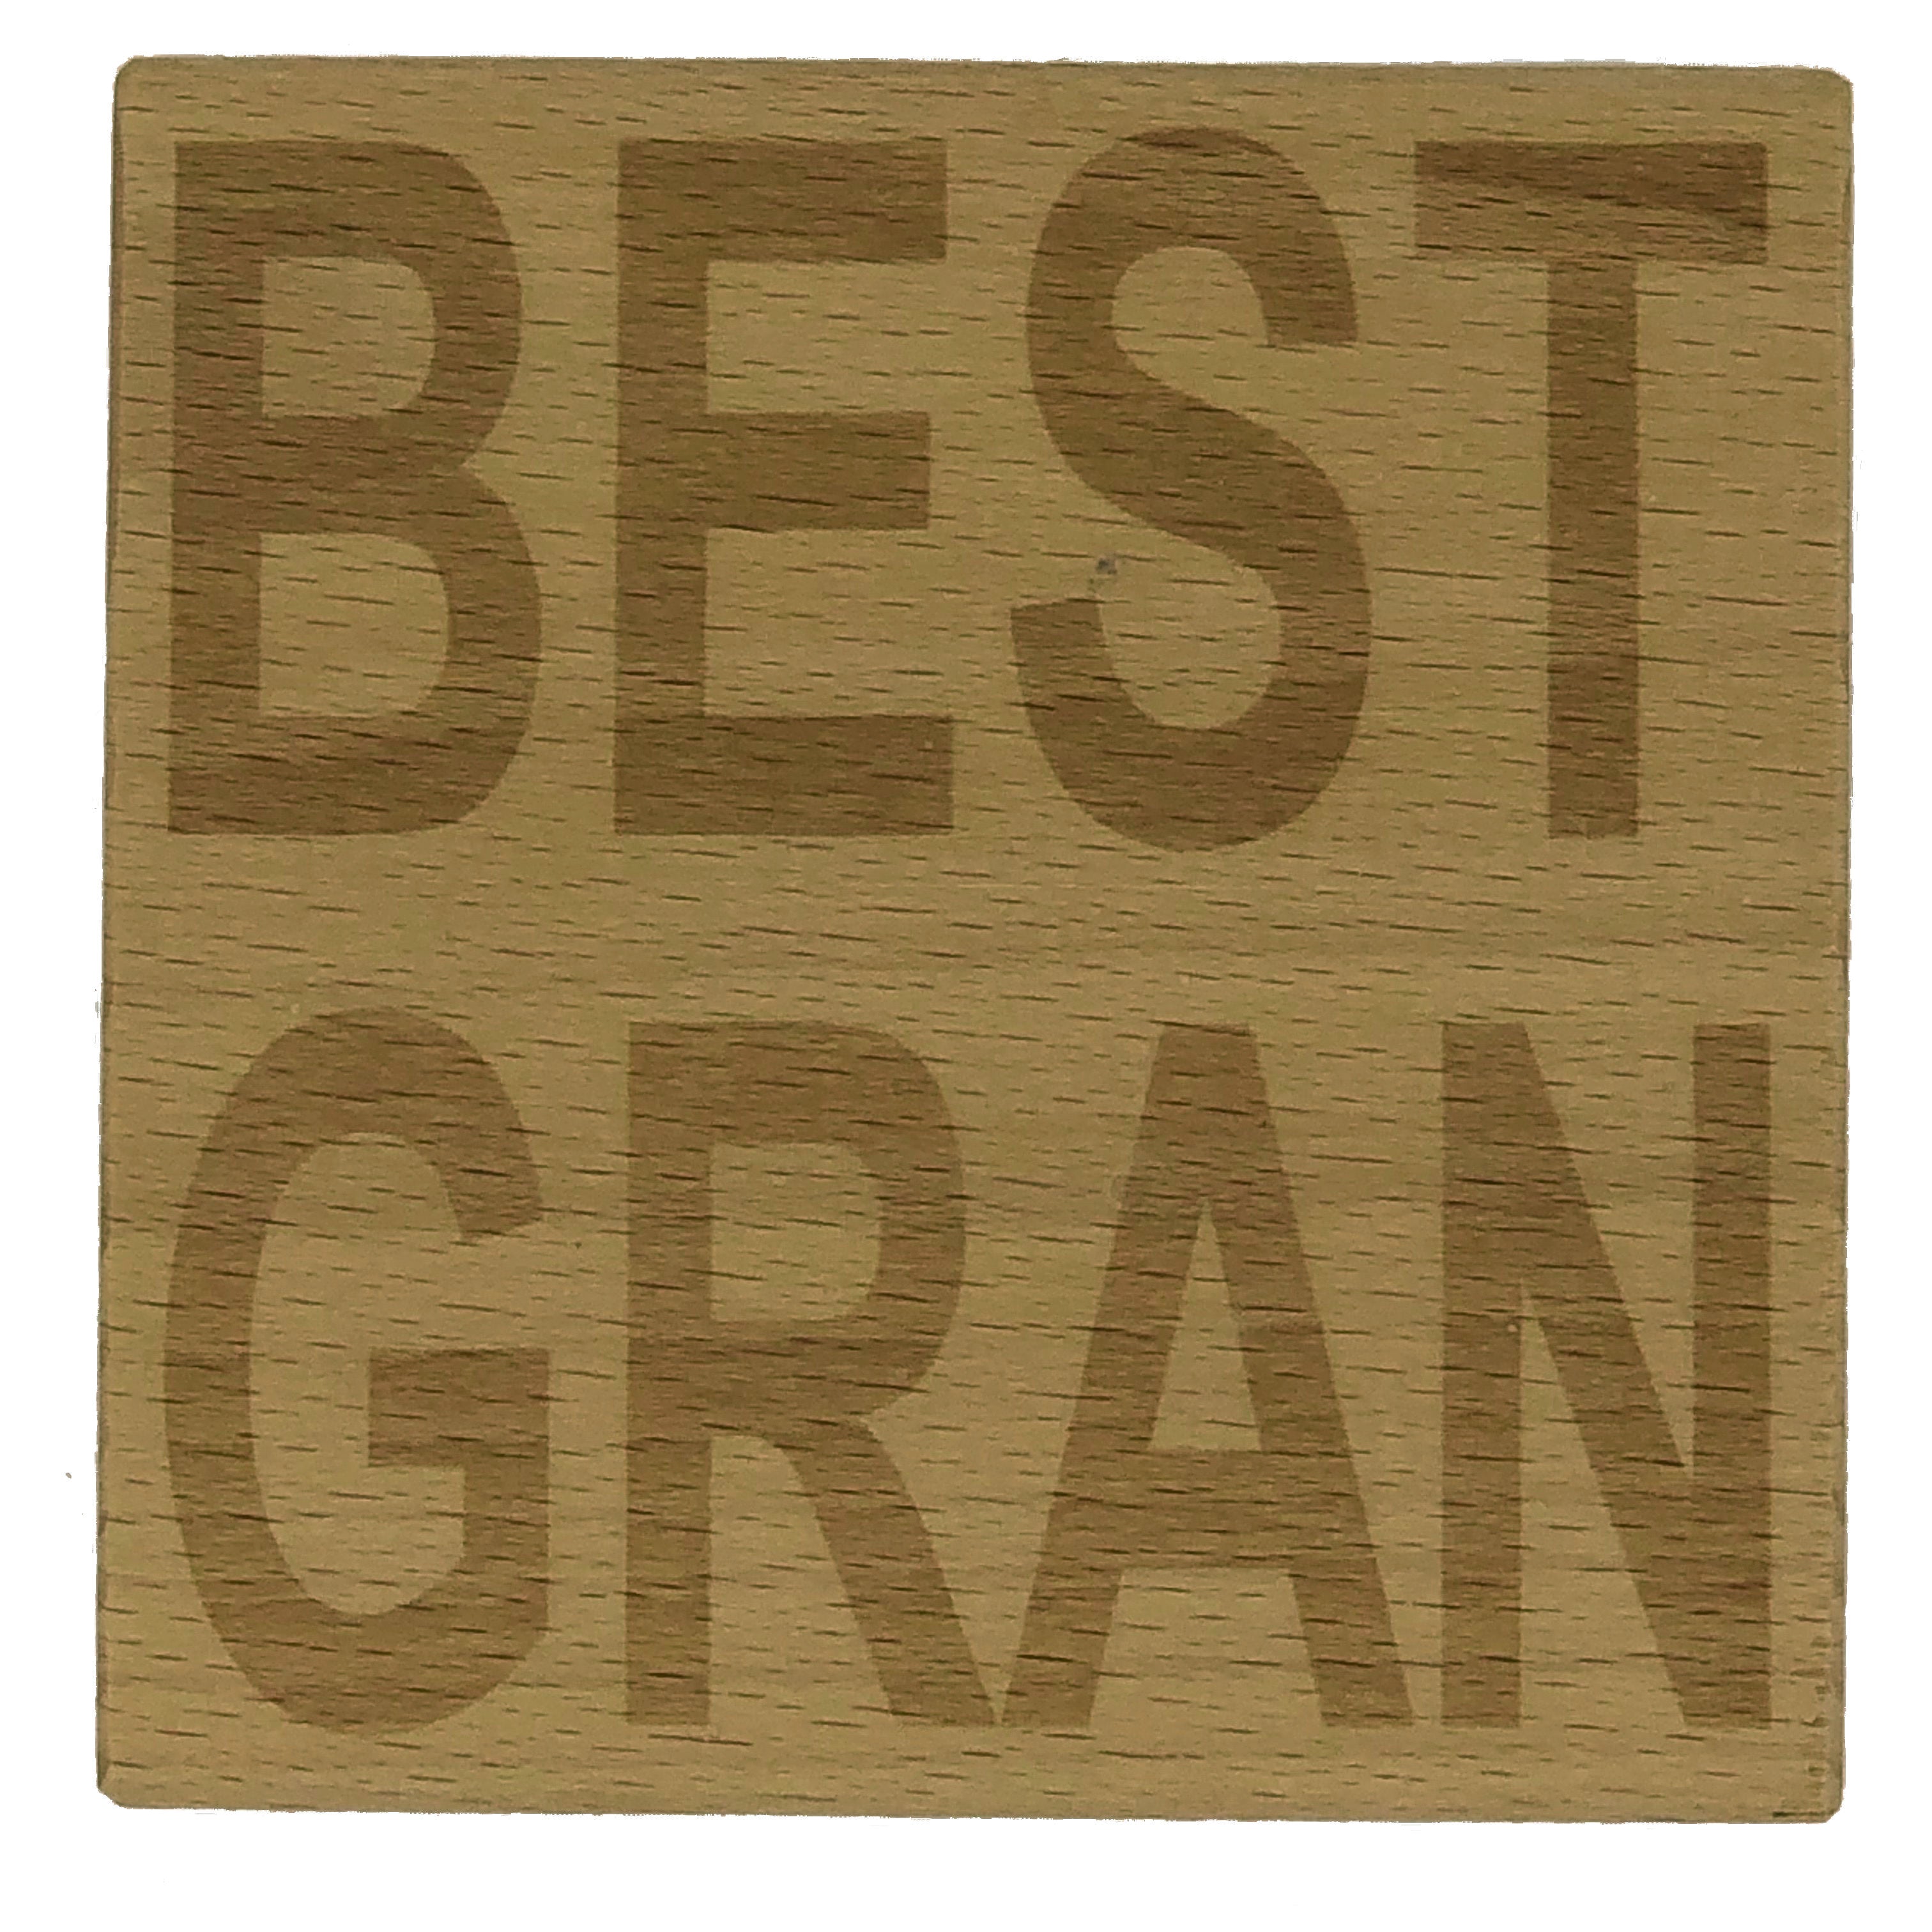 Wooden coaster gift - grandma - best gran - varnished for protection